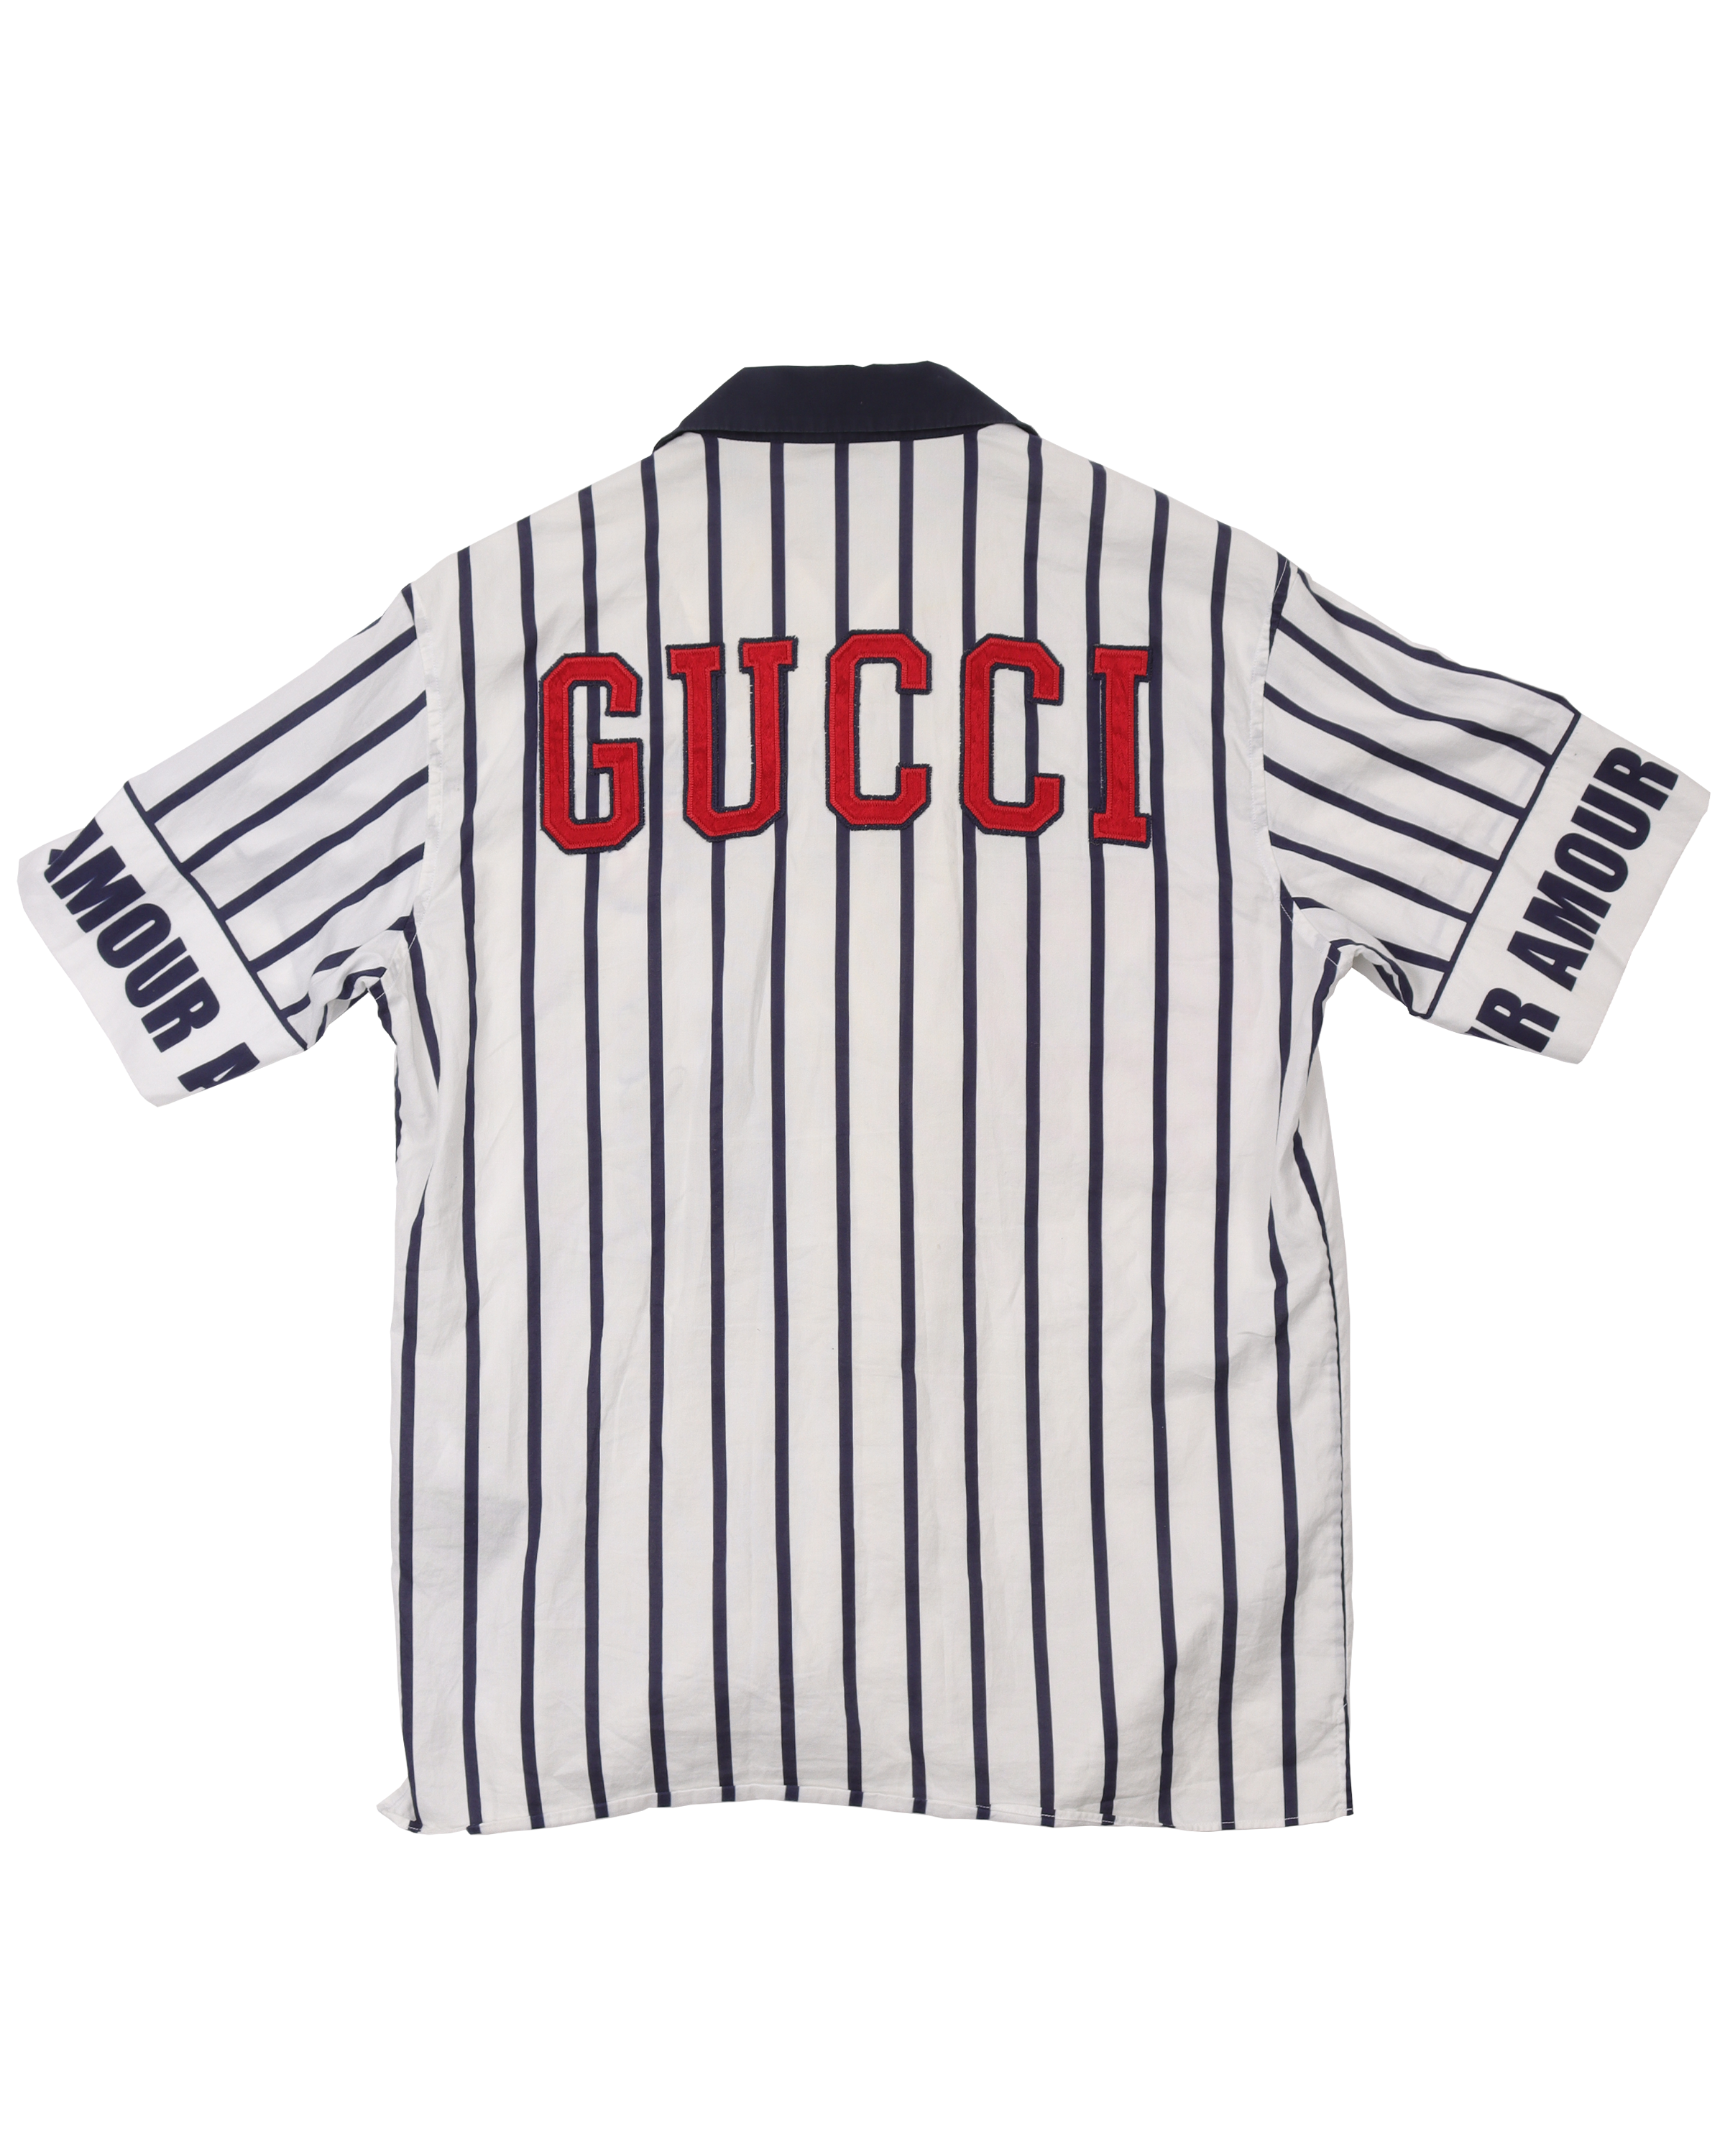 New York Yankees Embroidered Shirt